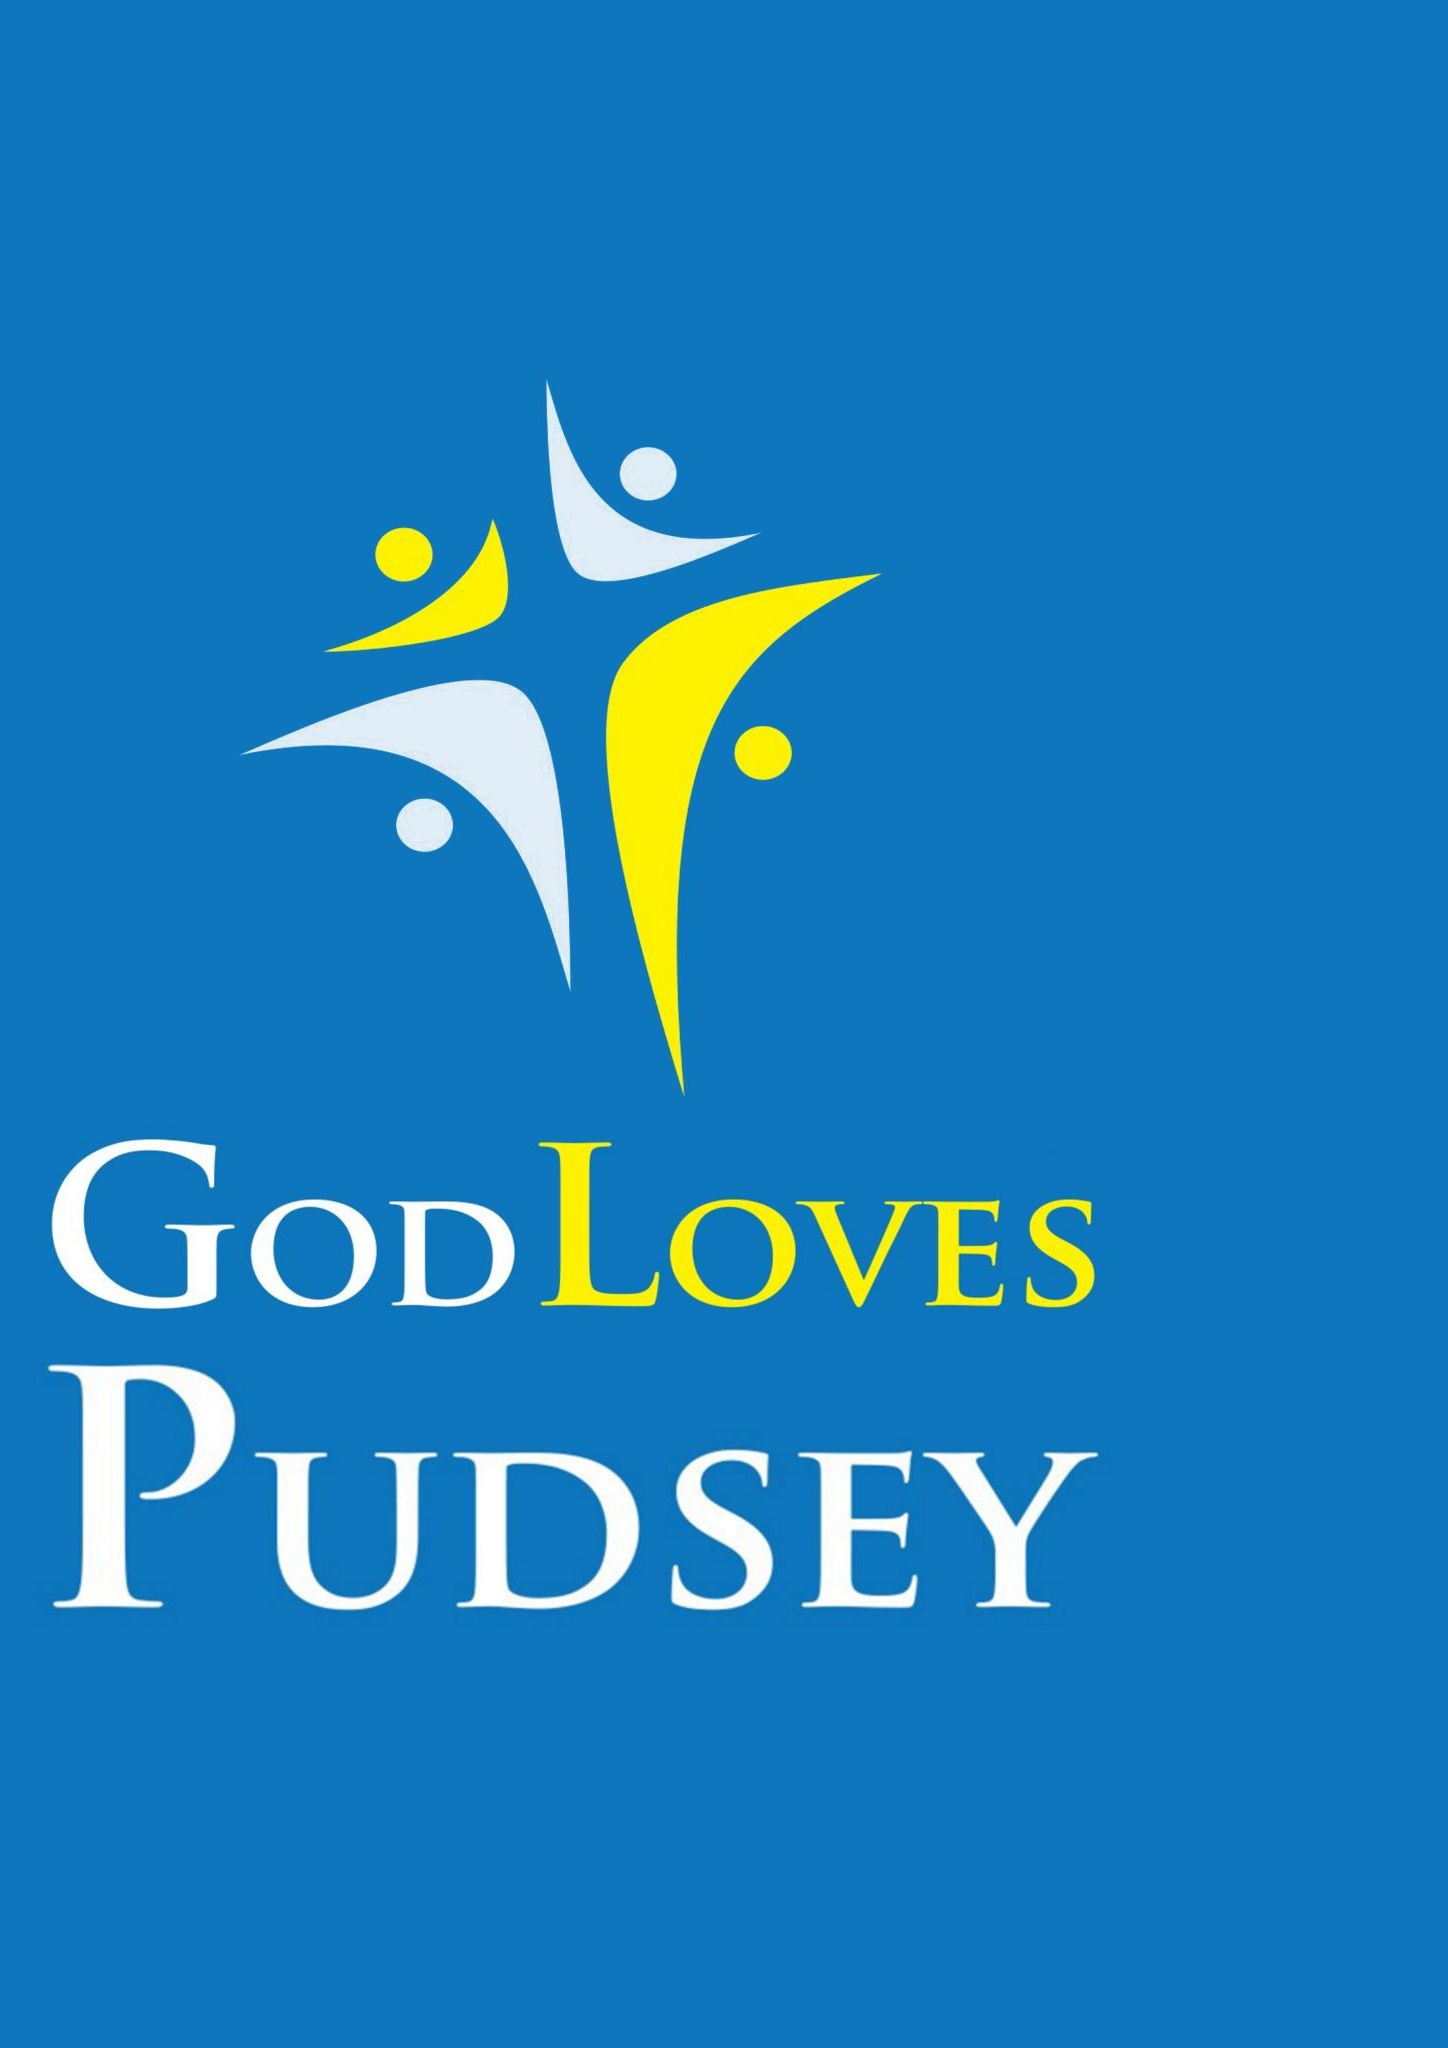 God Loves Pudsey logo